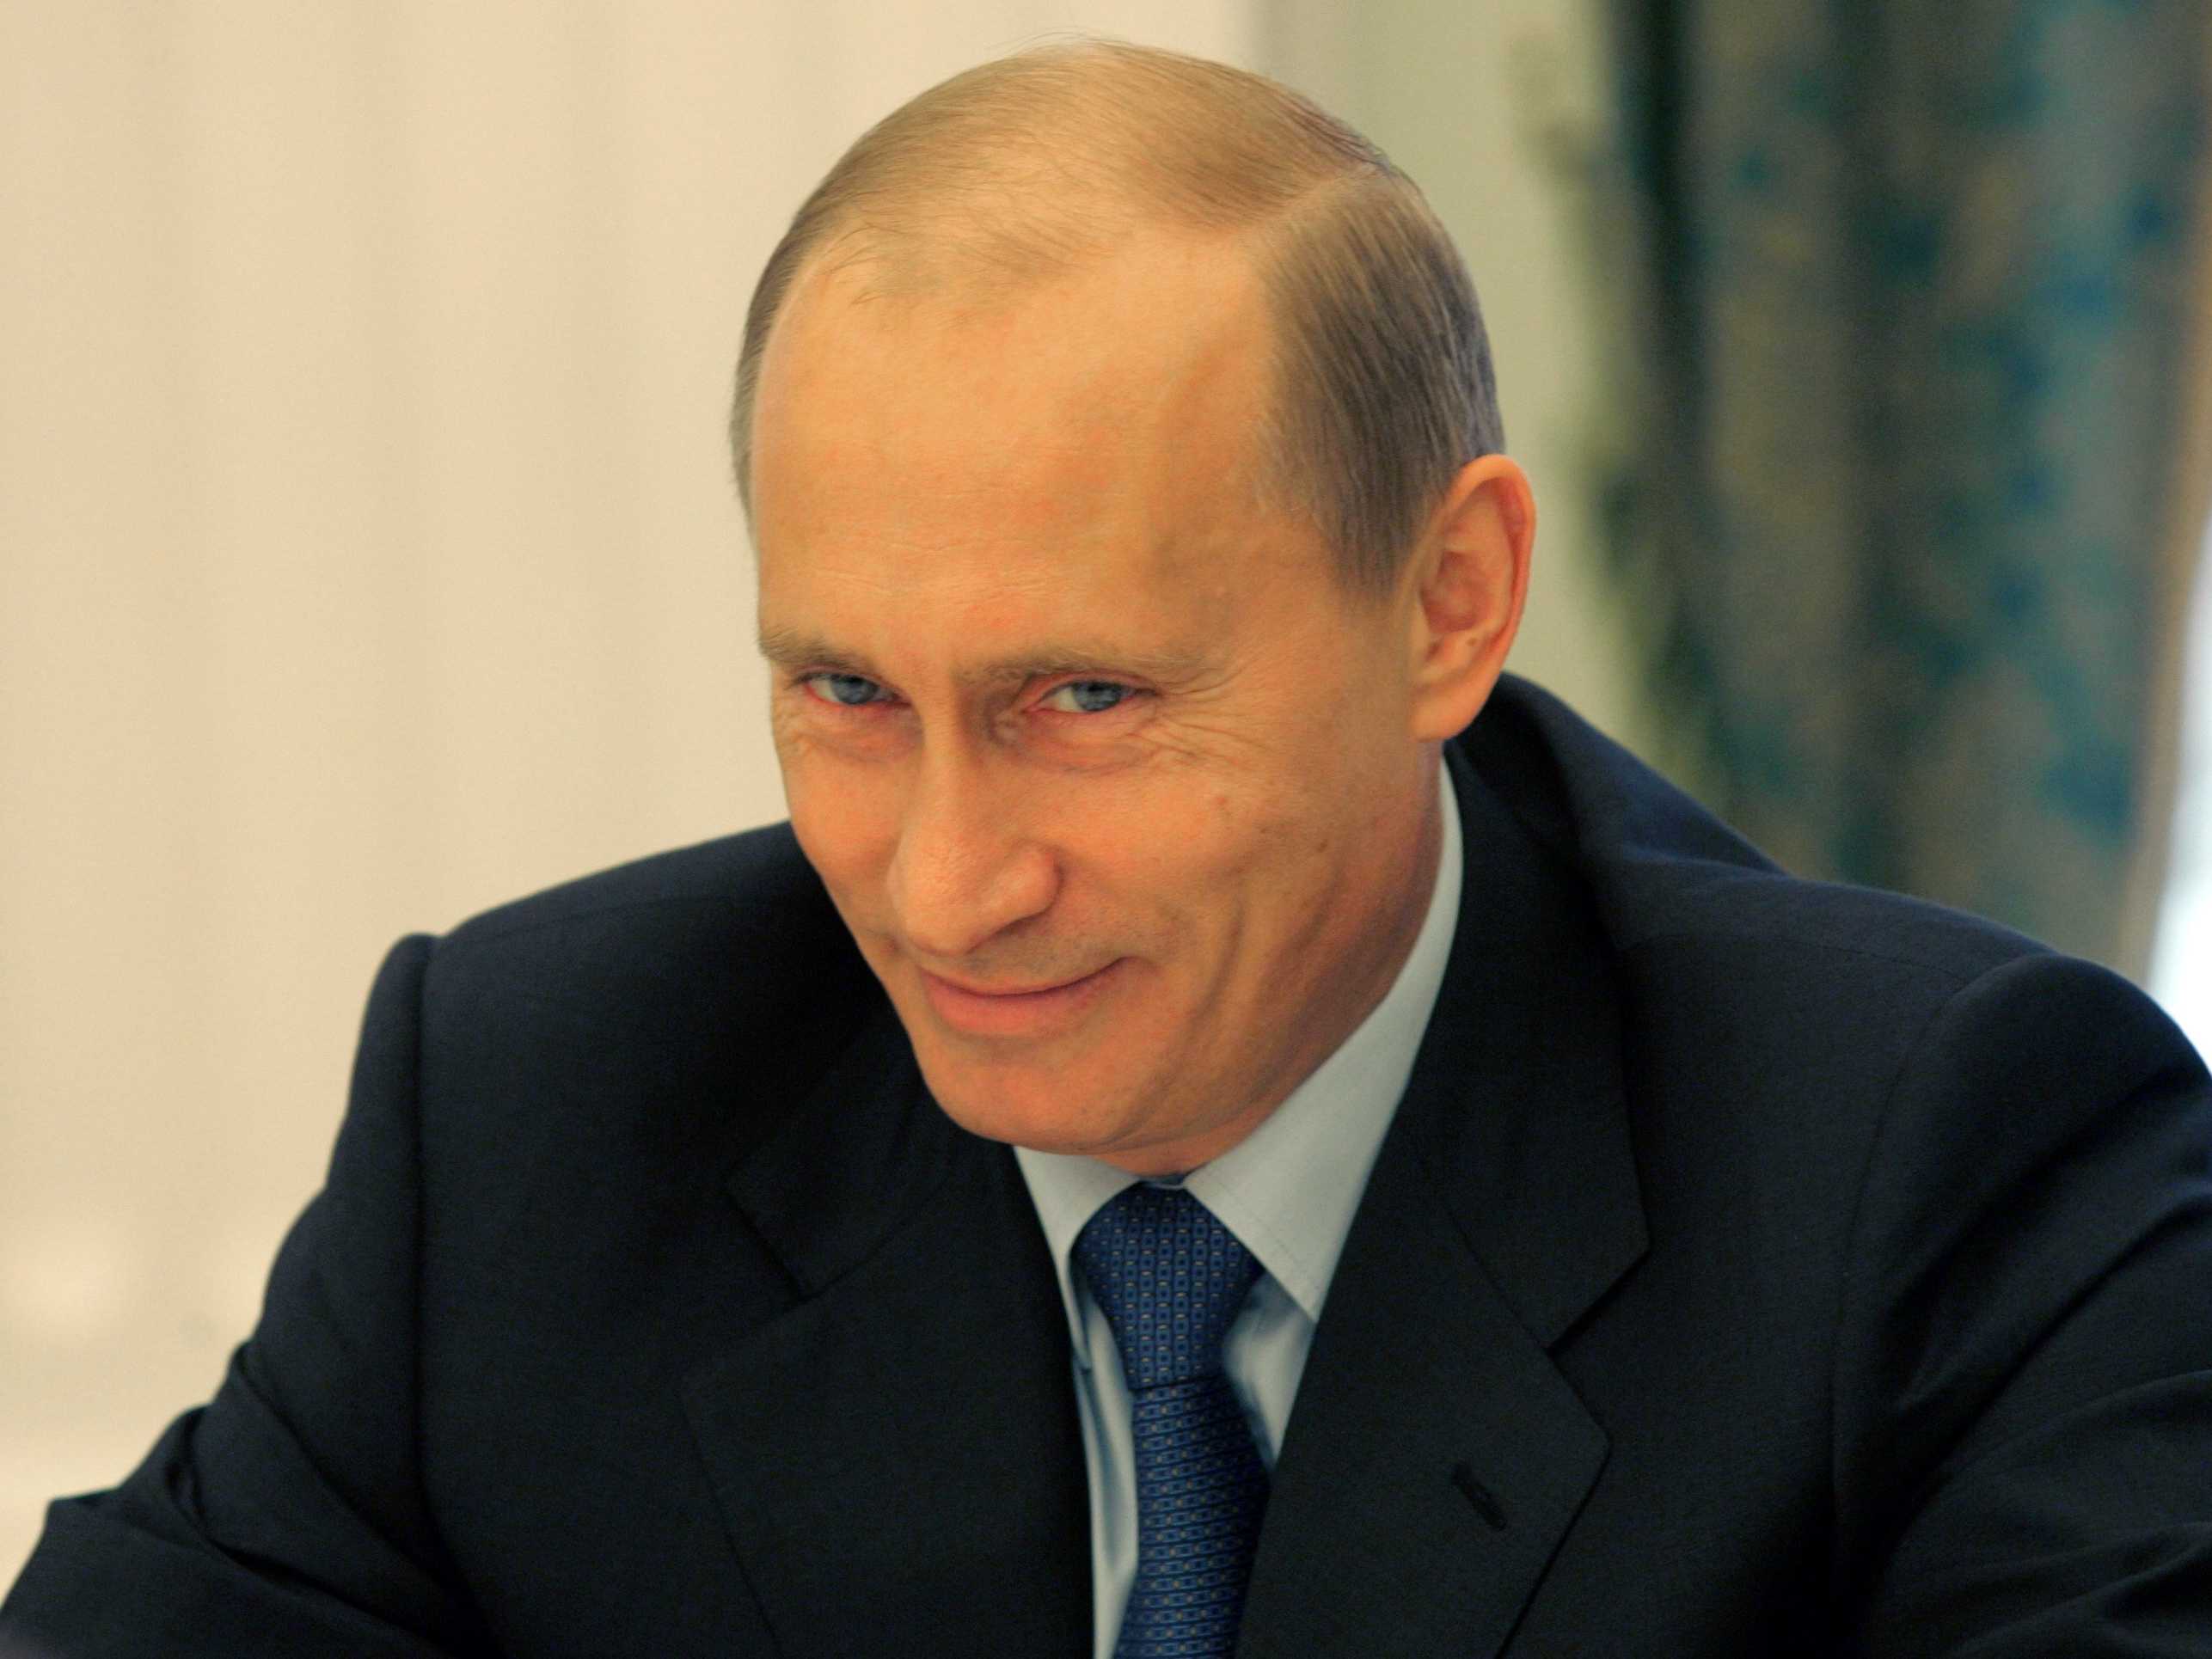 Vladimir Putin con una sonrisa malvada